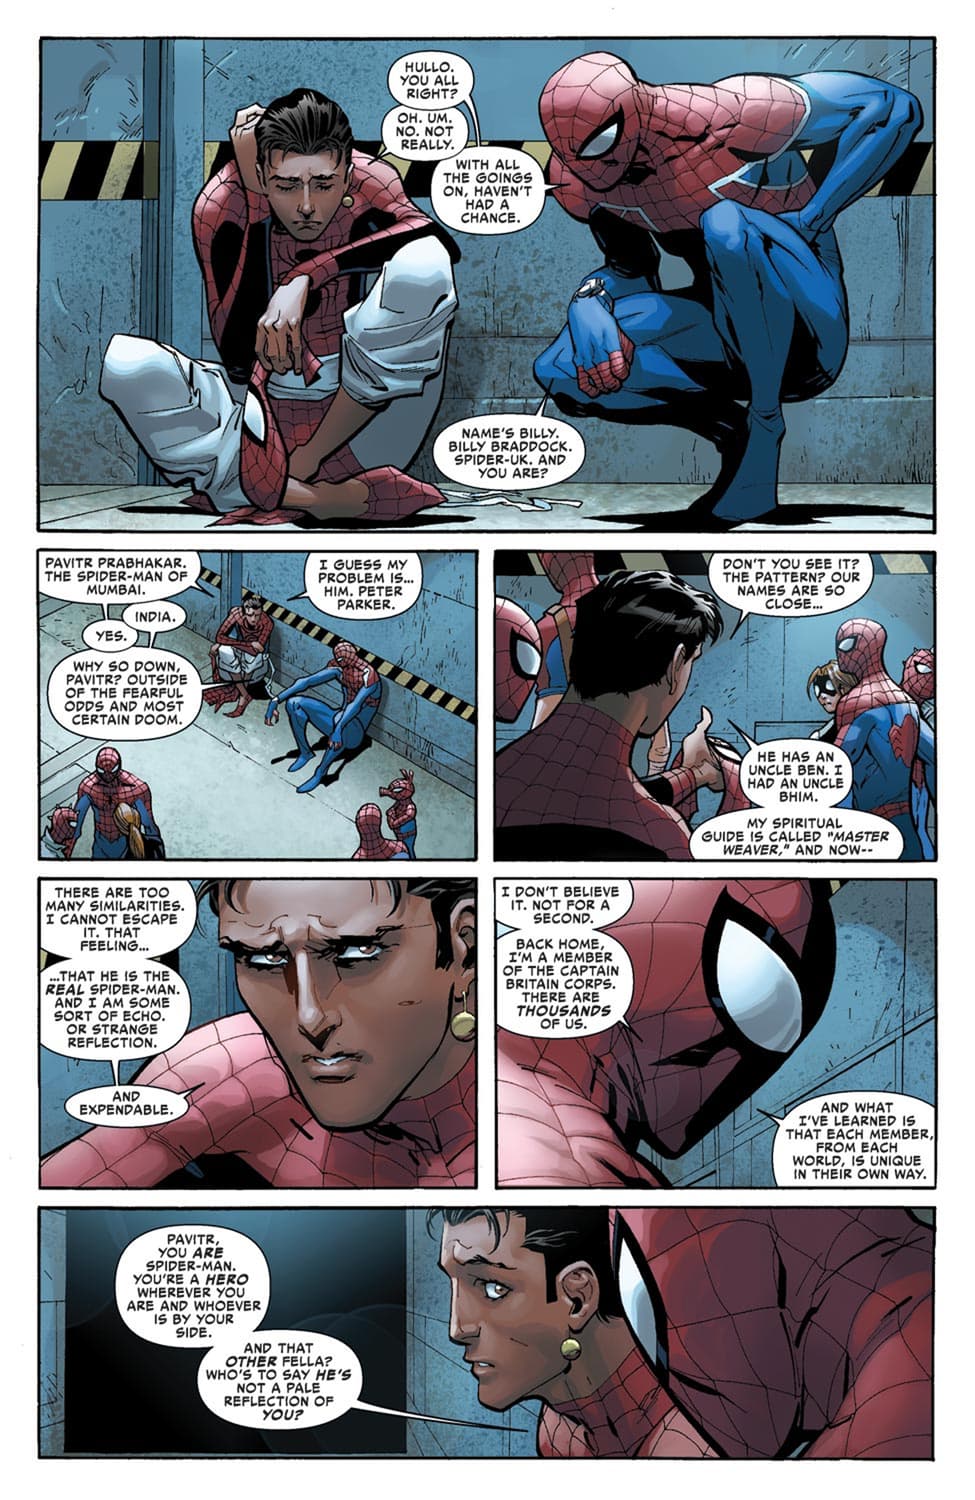 THE AMAZING SPIDER-MAN (2014) #13